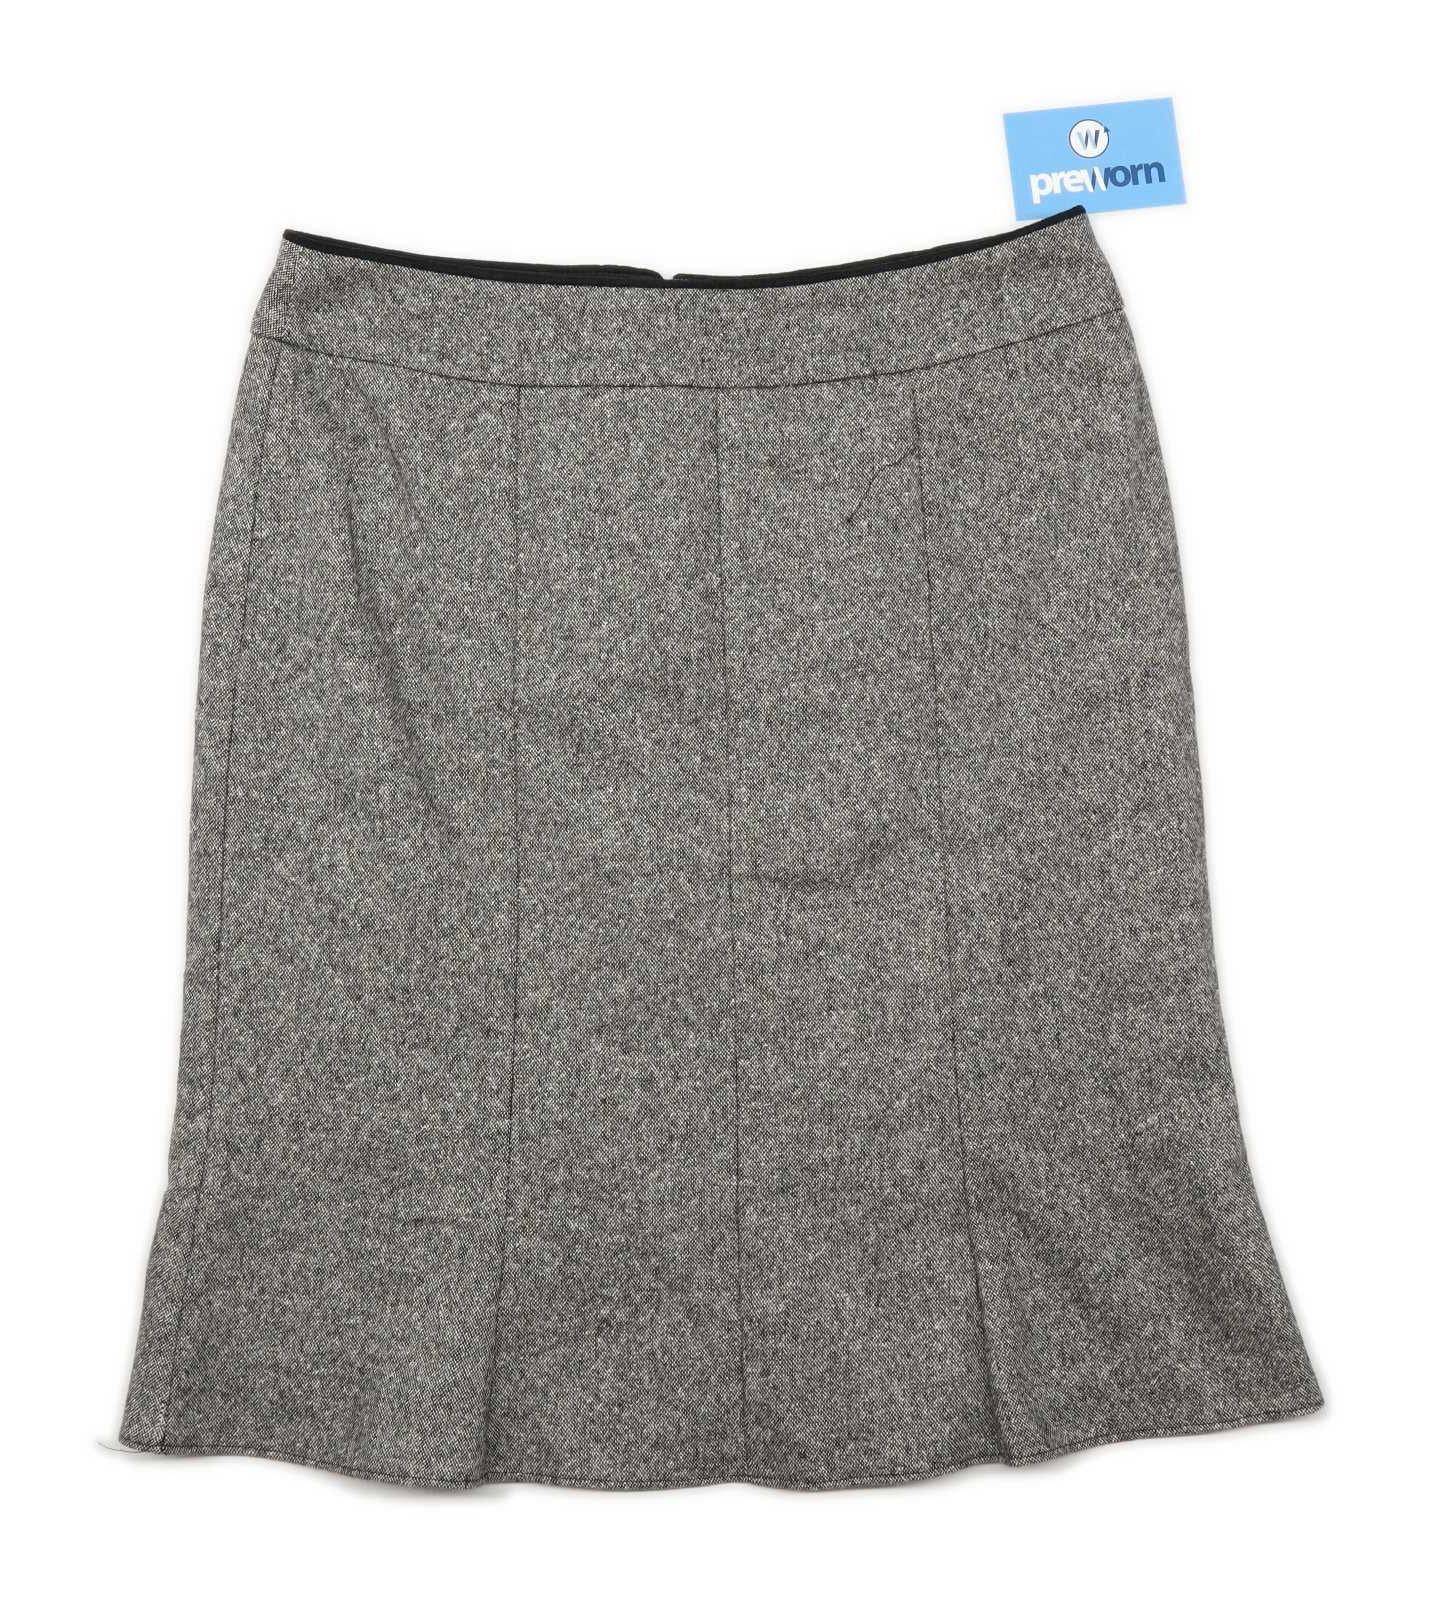 Etam Womens Size 12 Wool Blend Grey Pleated Skirt (Regular)